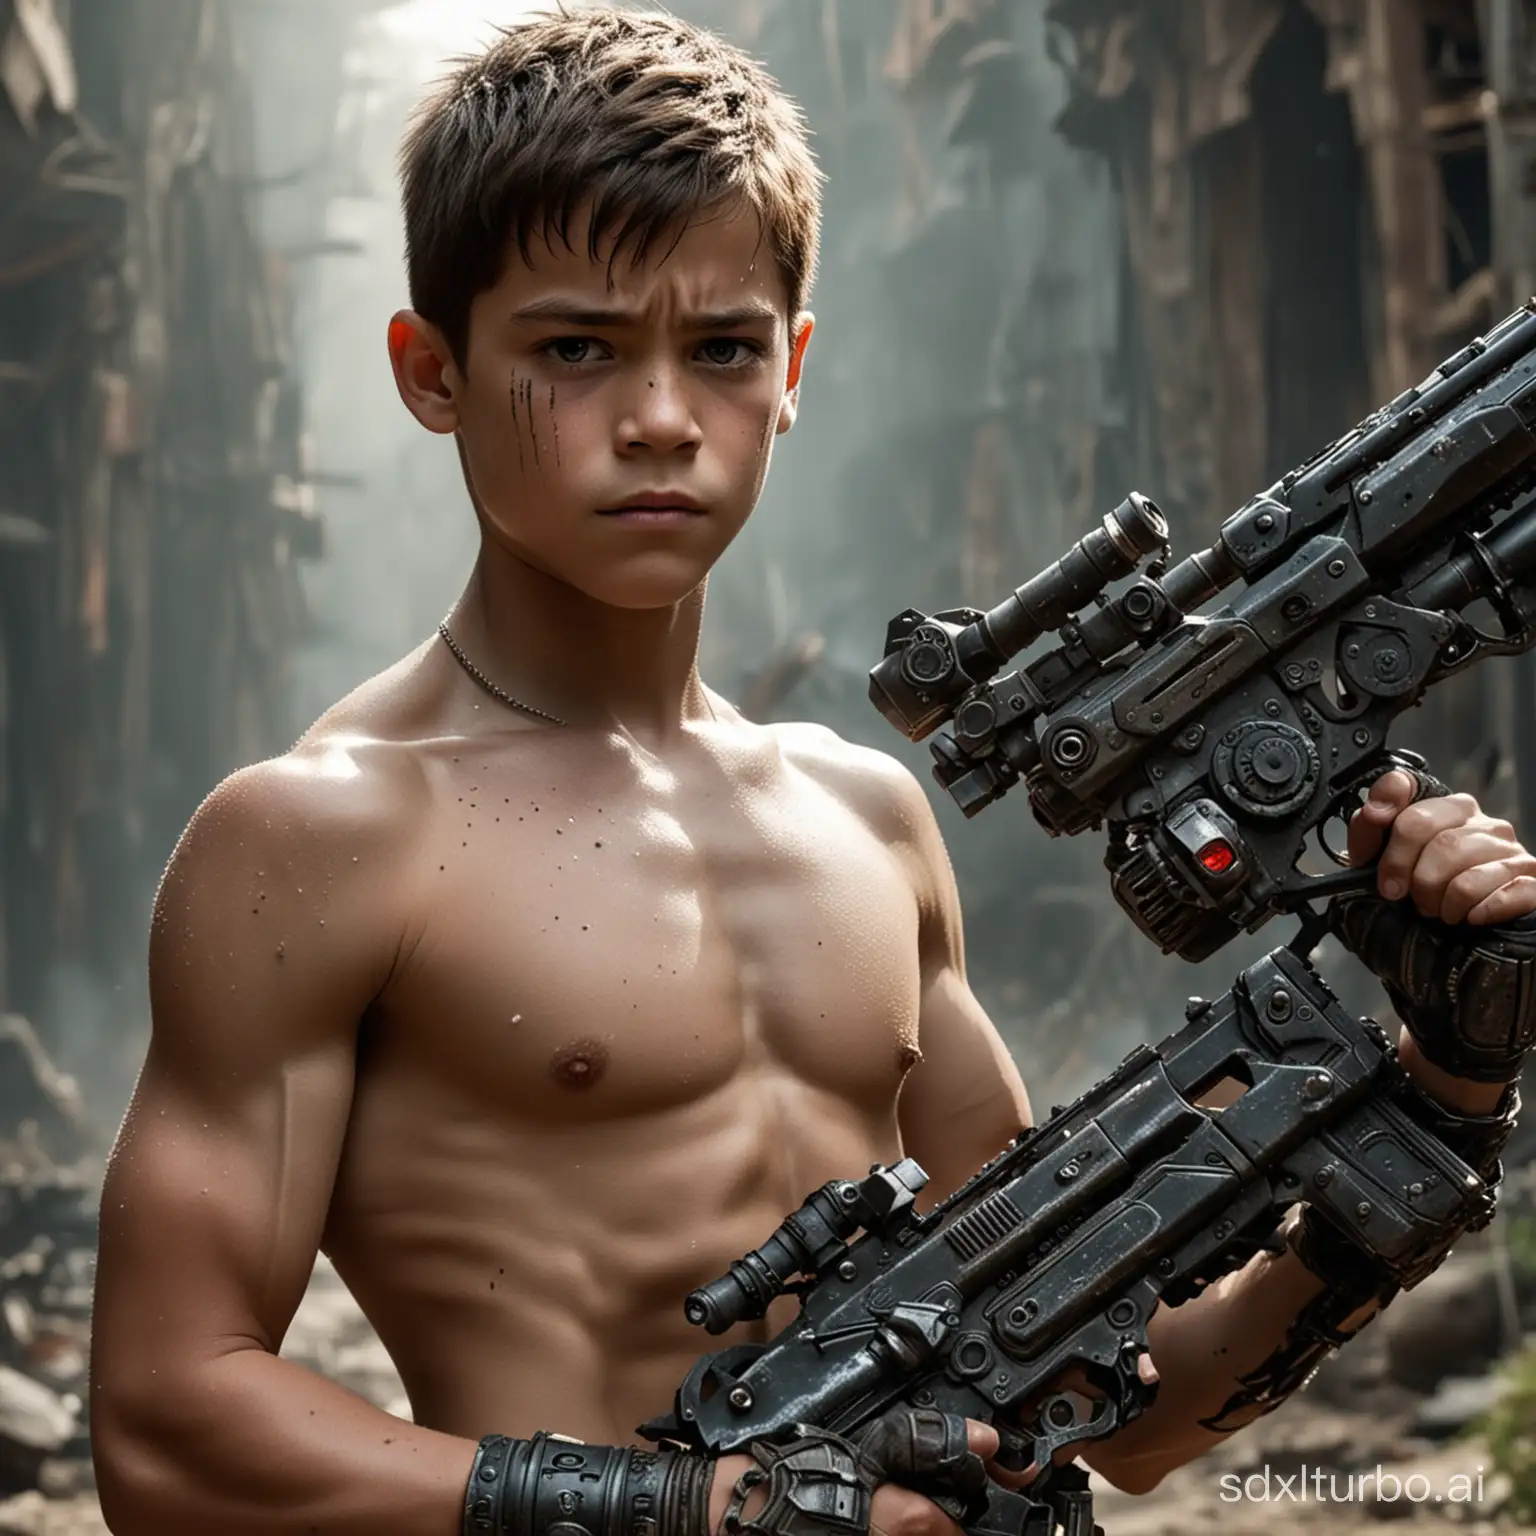 Muscular-12YearOld-Boy-with-Shotgun-in-PostApocalyptic-Setting